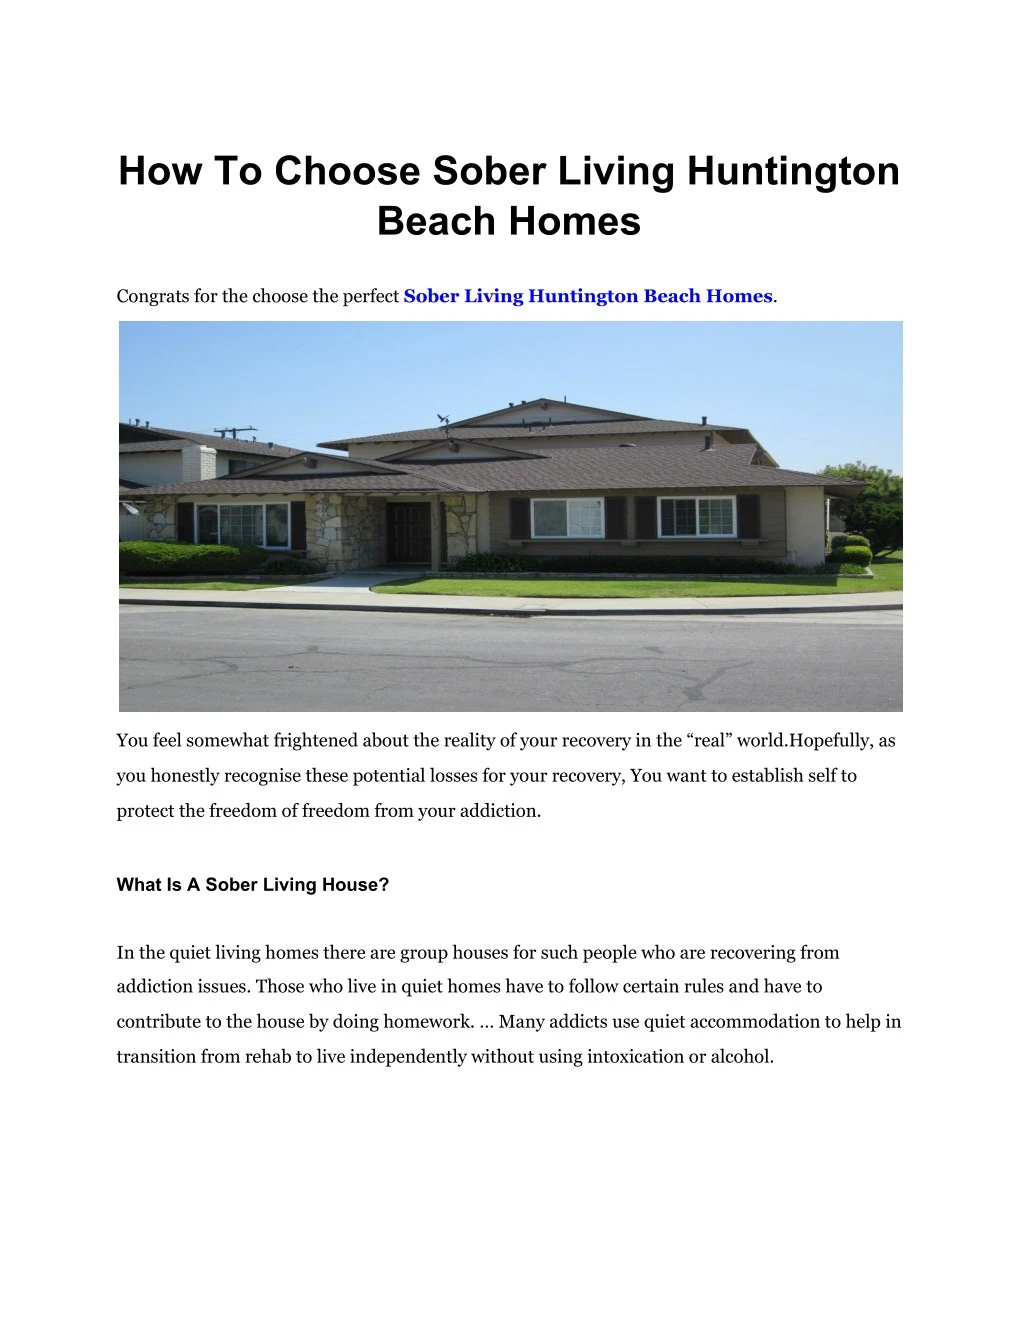 how to choose sober living huntington beach homes